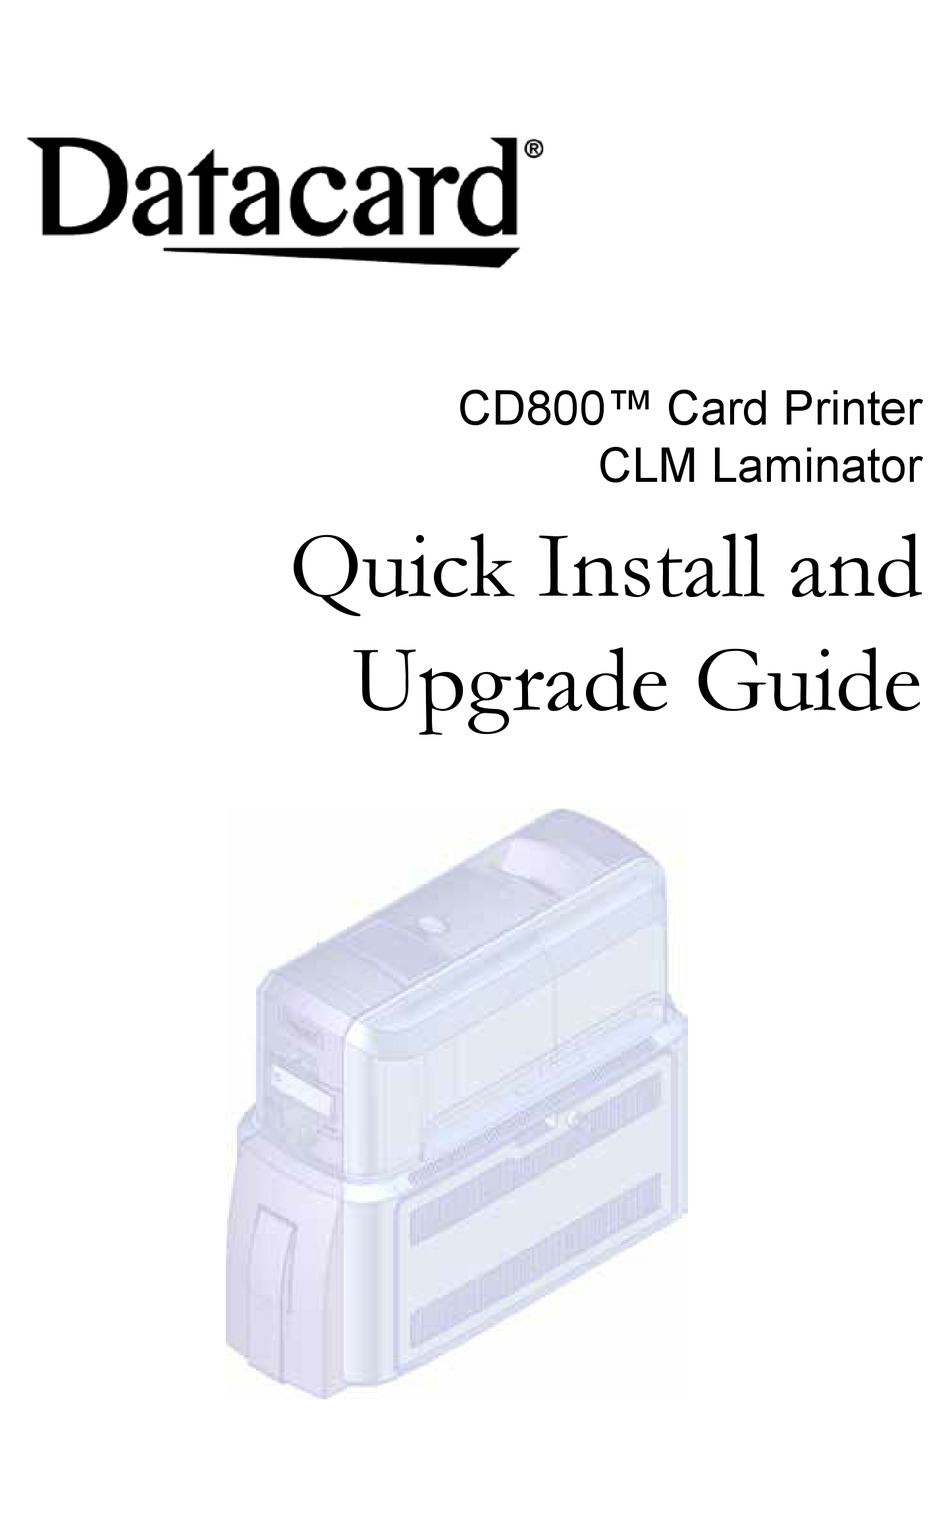 DATACARD CD800 QUICK INSTALL MANUAL Pdf Download | ManualsLib